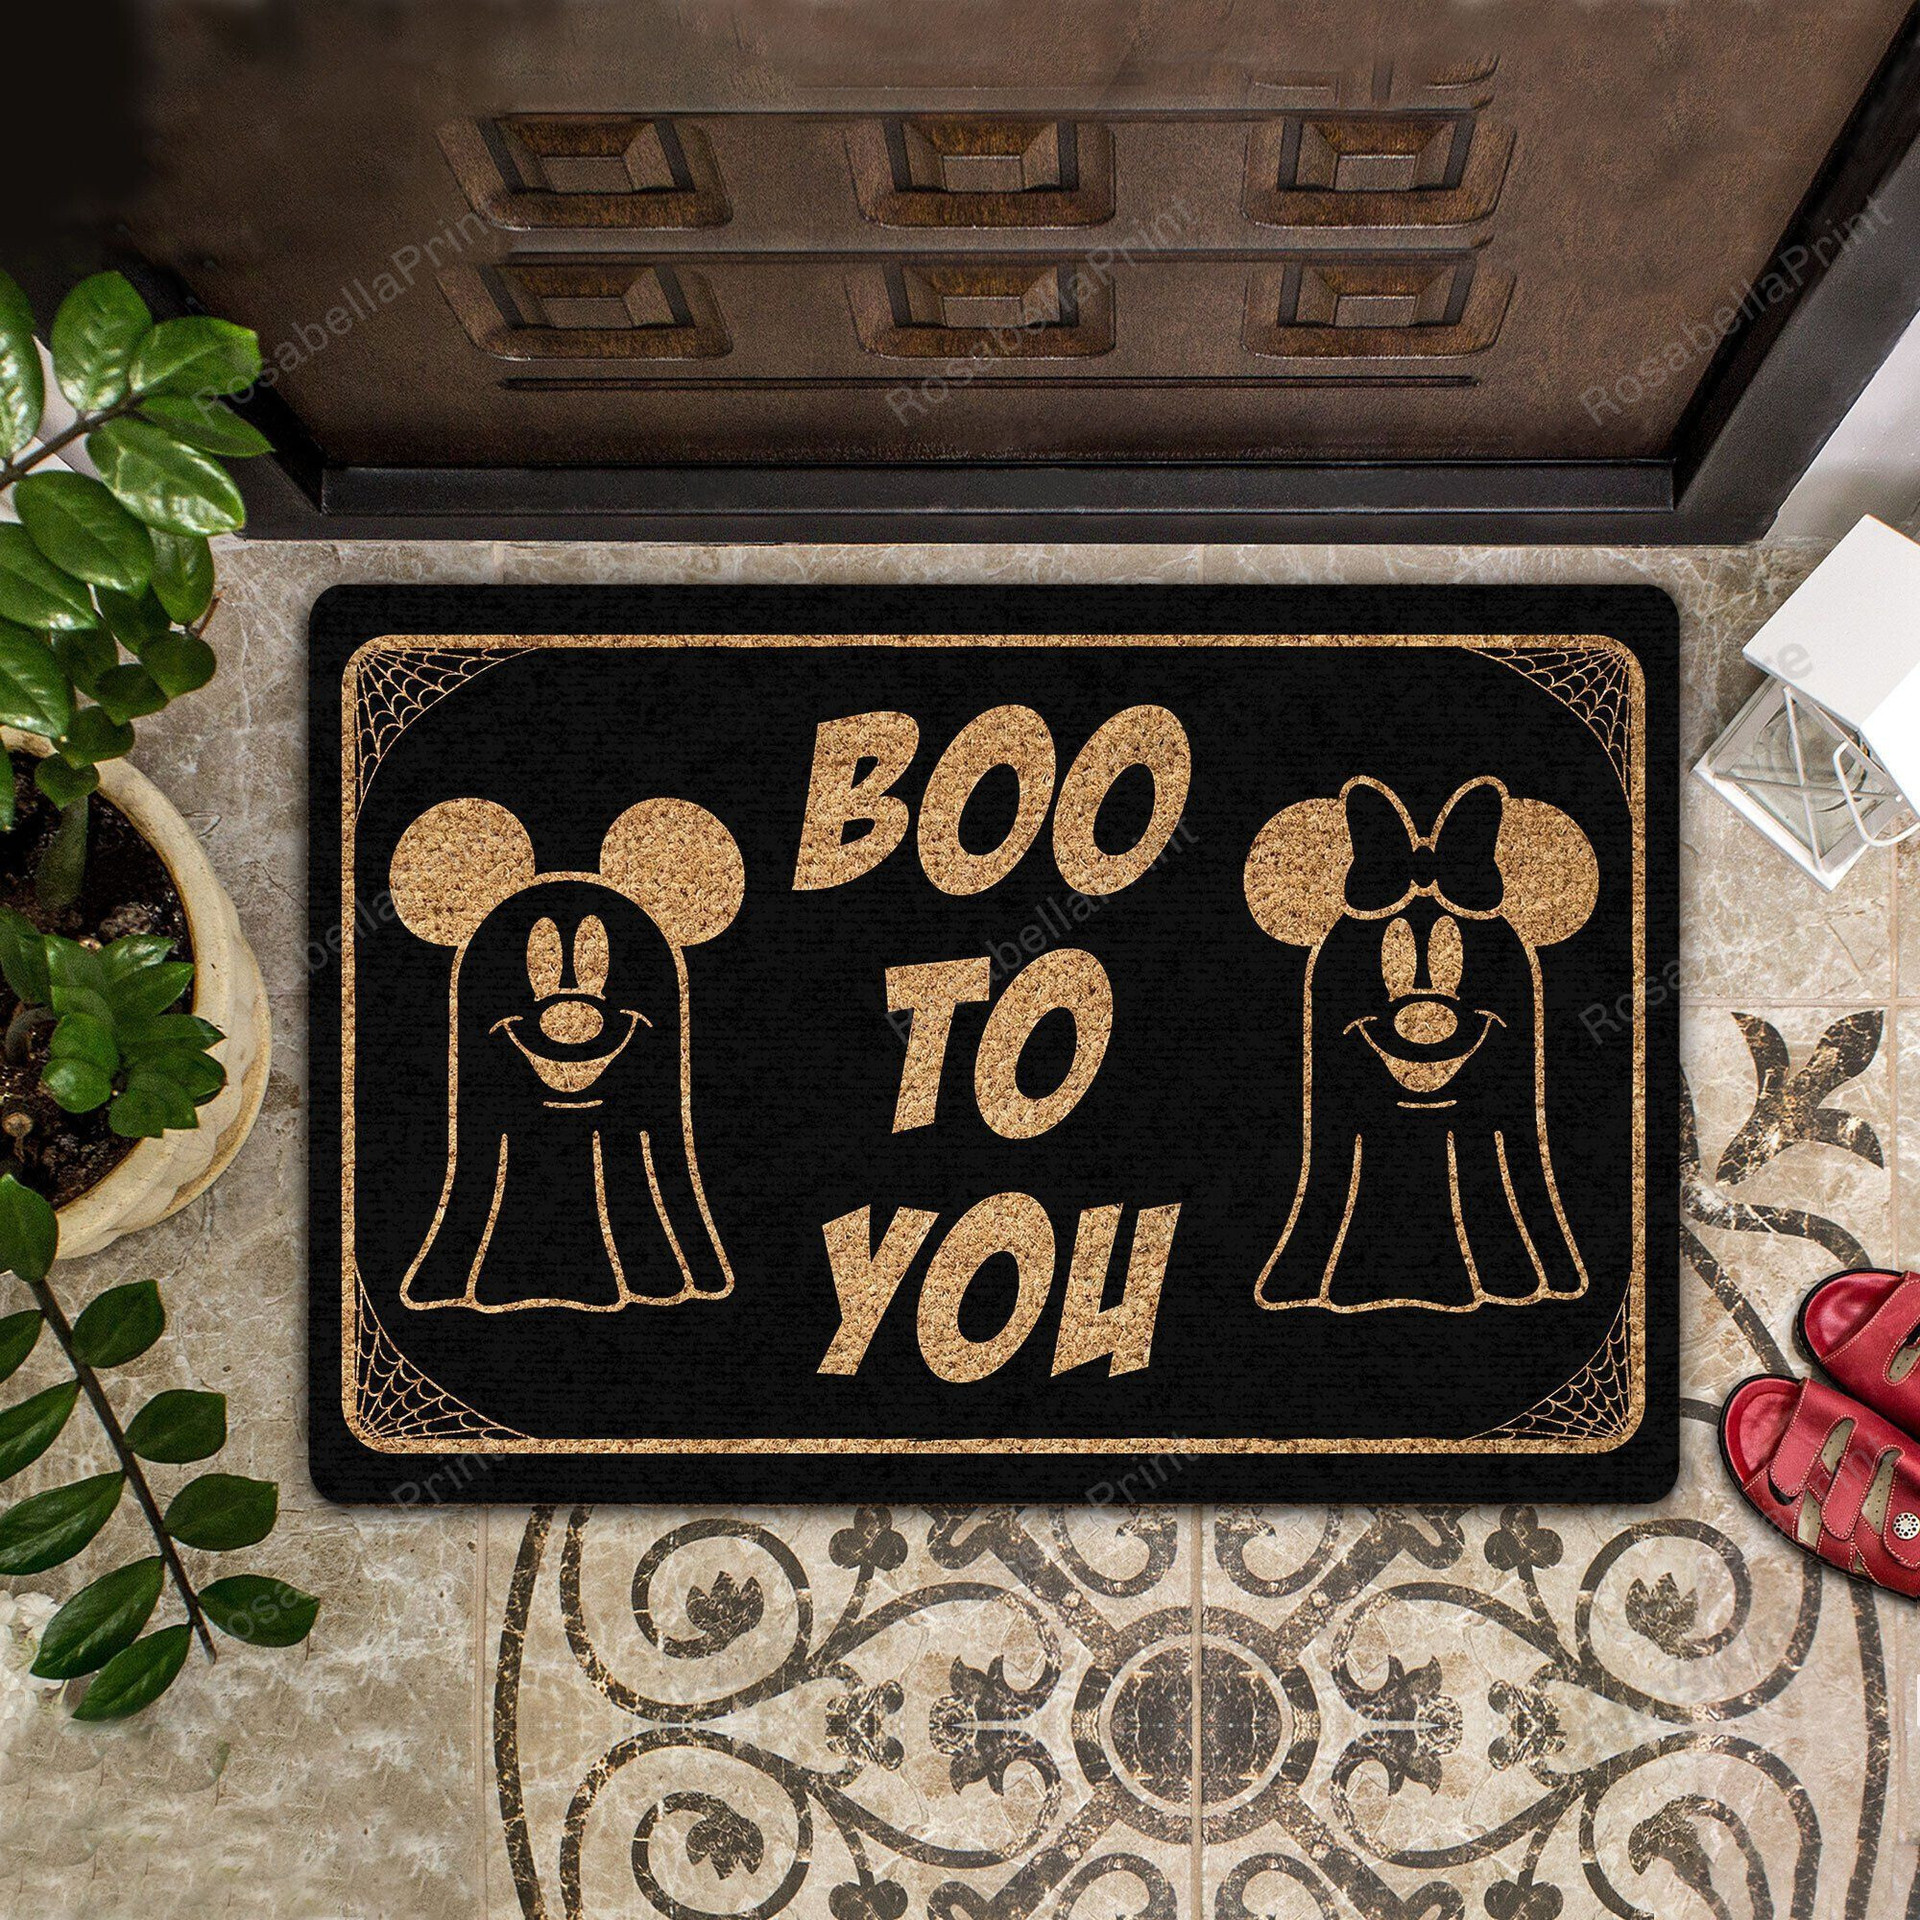 Boo To You All Over Printing Funny Outdoor Indoor Wellcome Doormat  - Doormat Home Decor